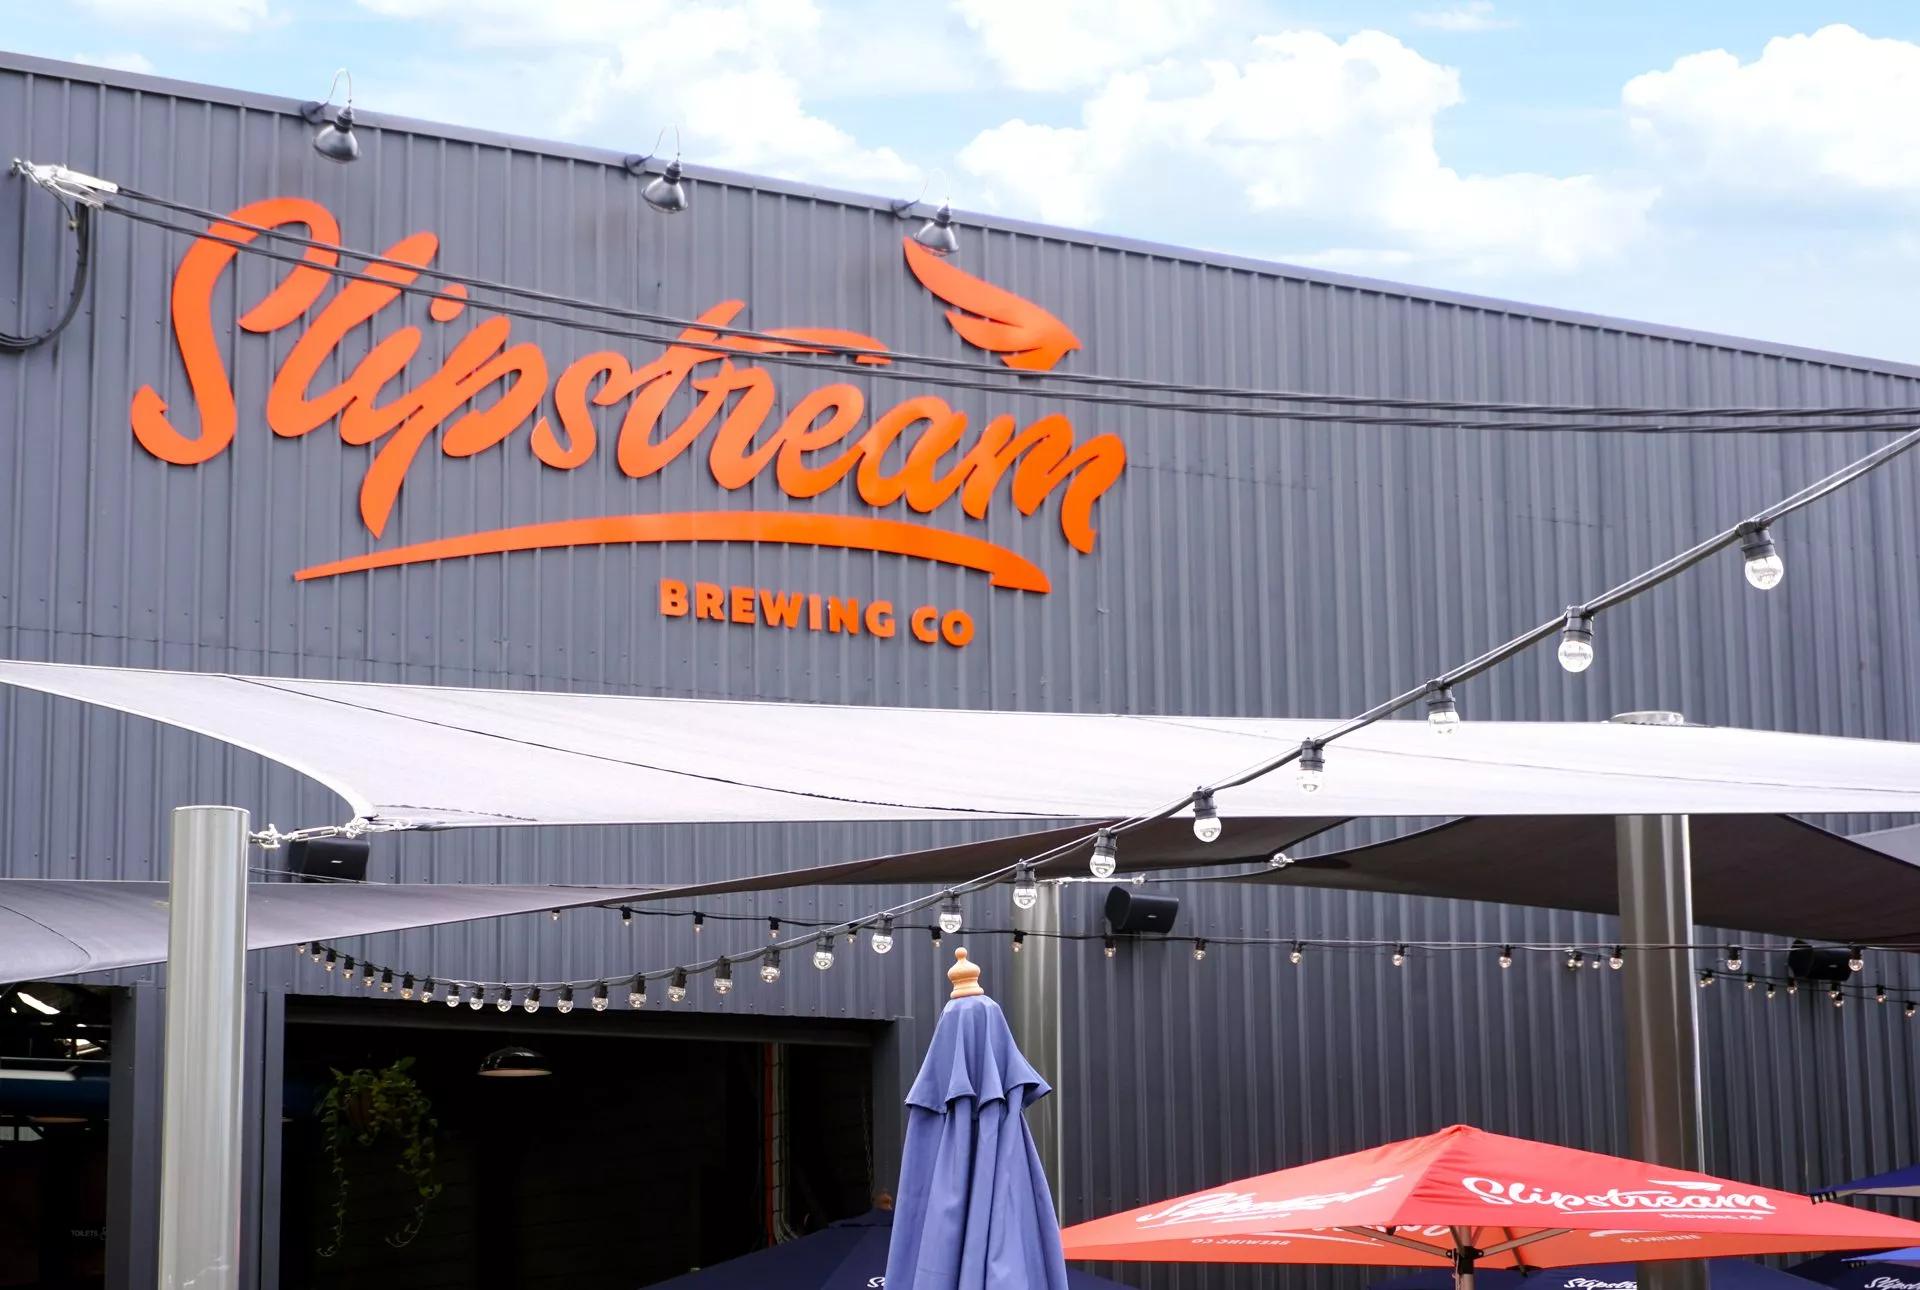 Slipstream Brewery